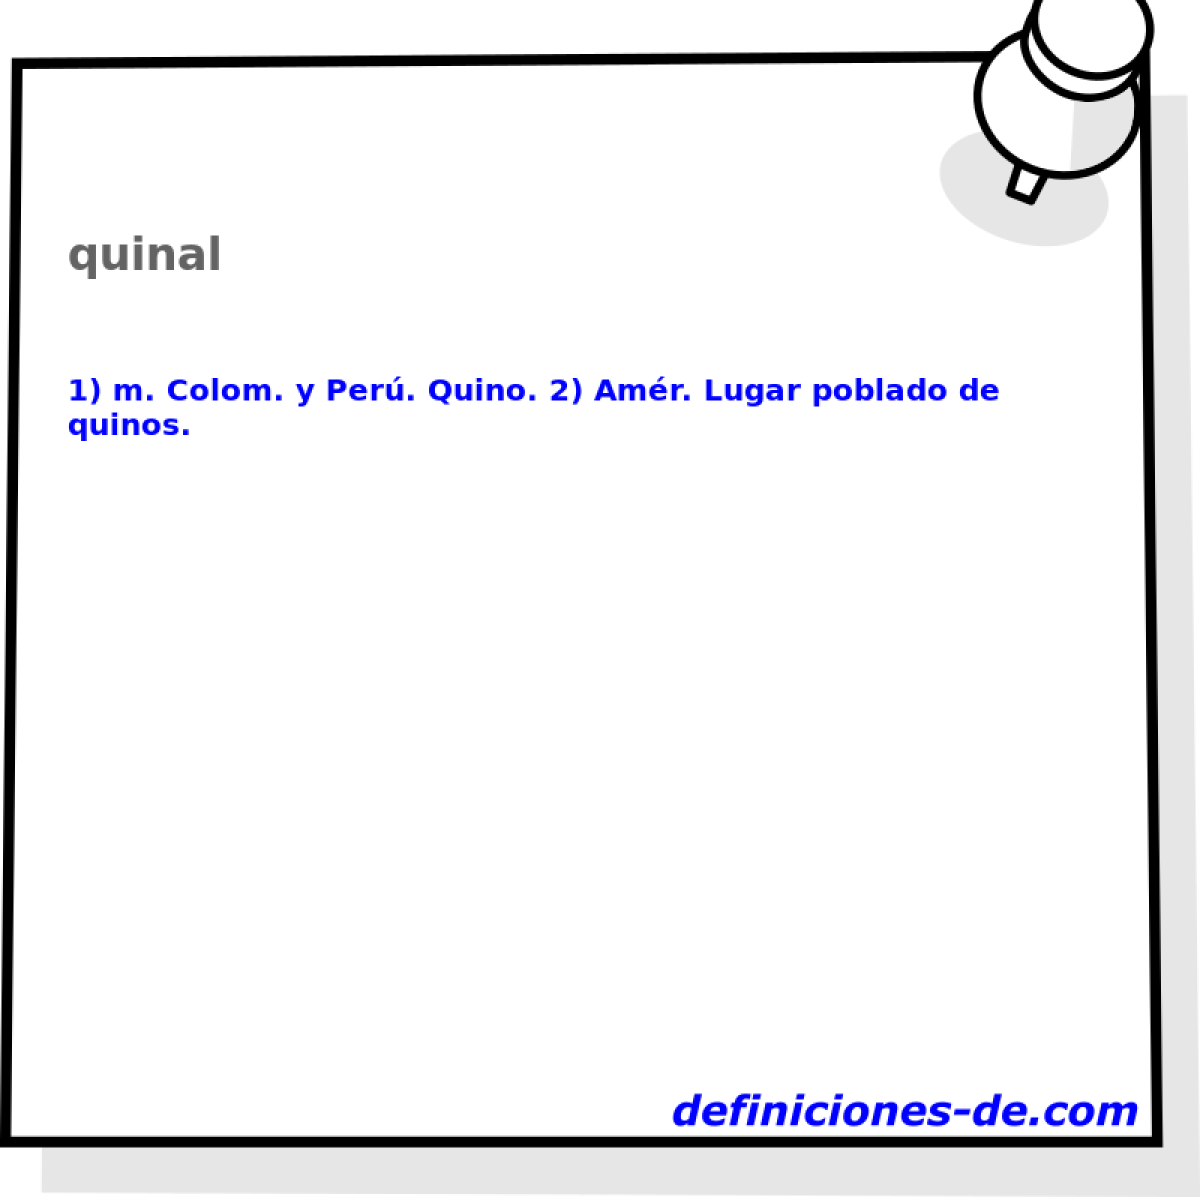 quinal 